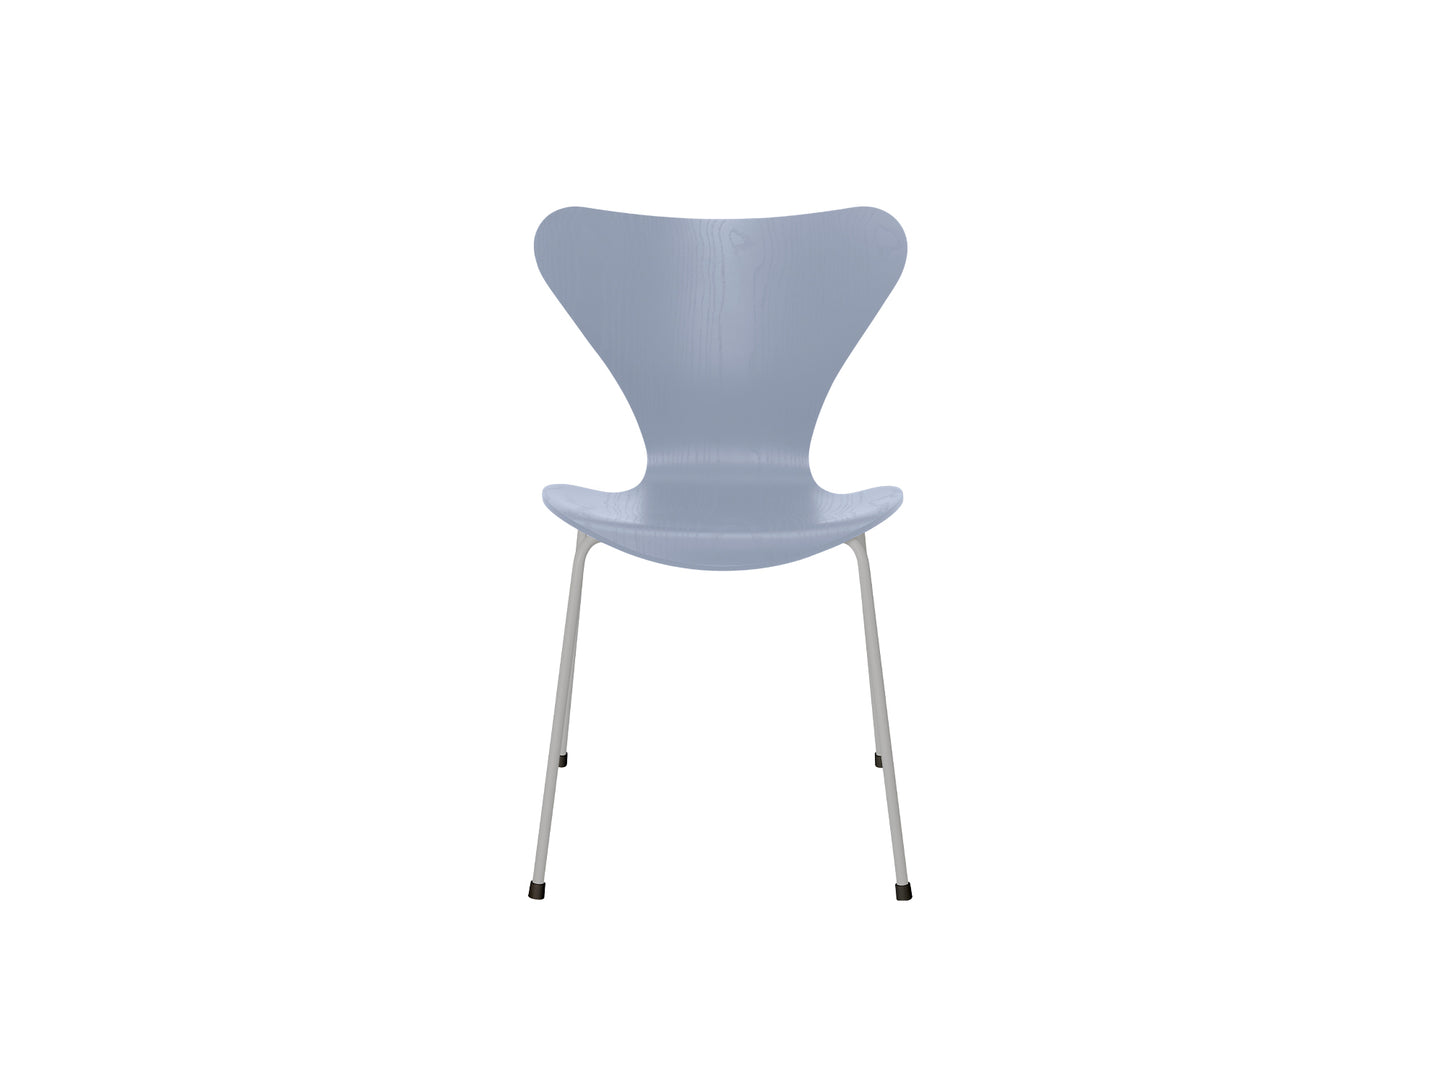 Series 7™ 3107 Dining Chair by Fritz Hansen - Lavender Blue Coloured Ash Veneer Shell / Nine Grey Steel